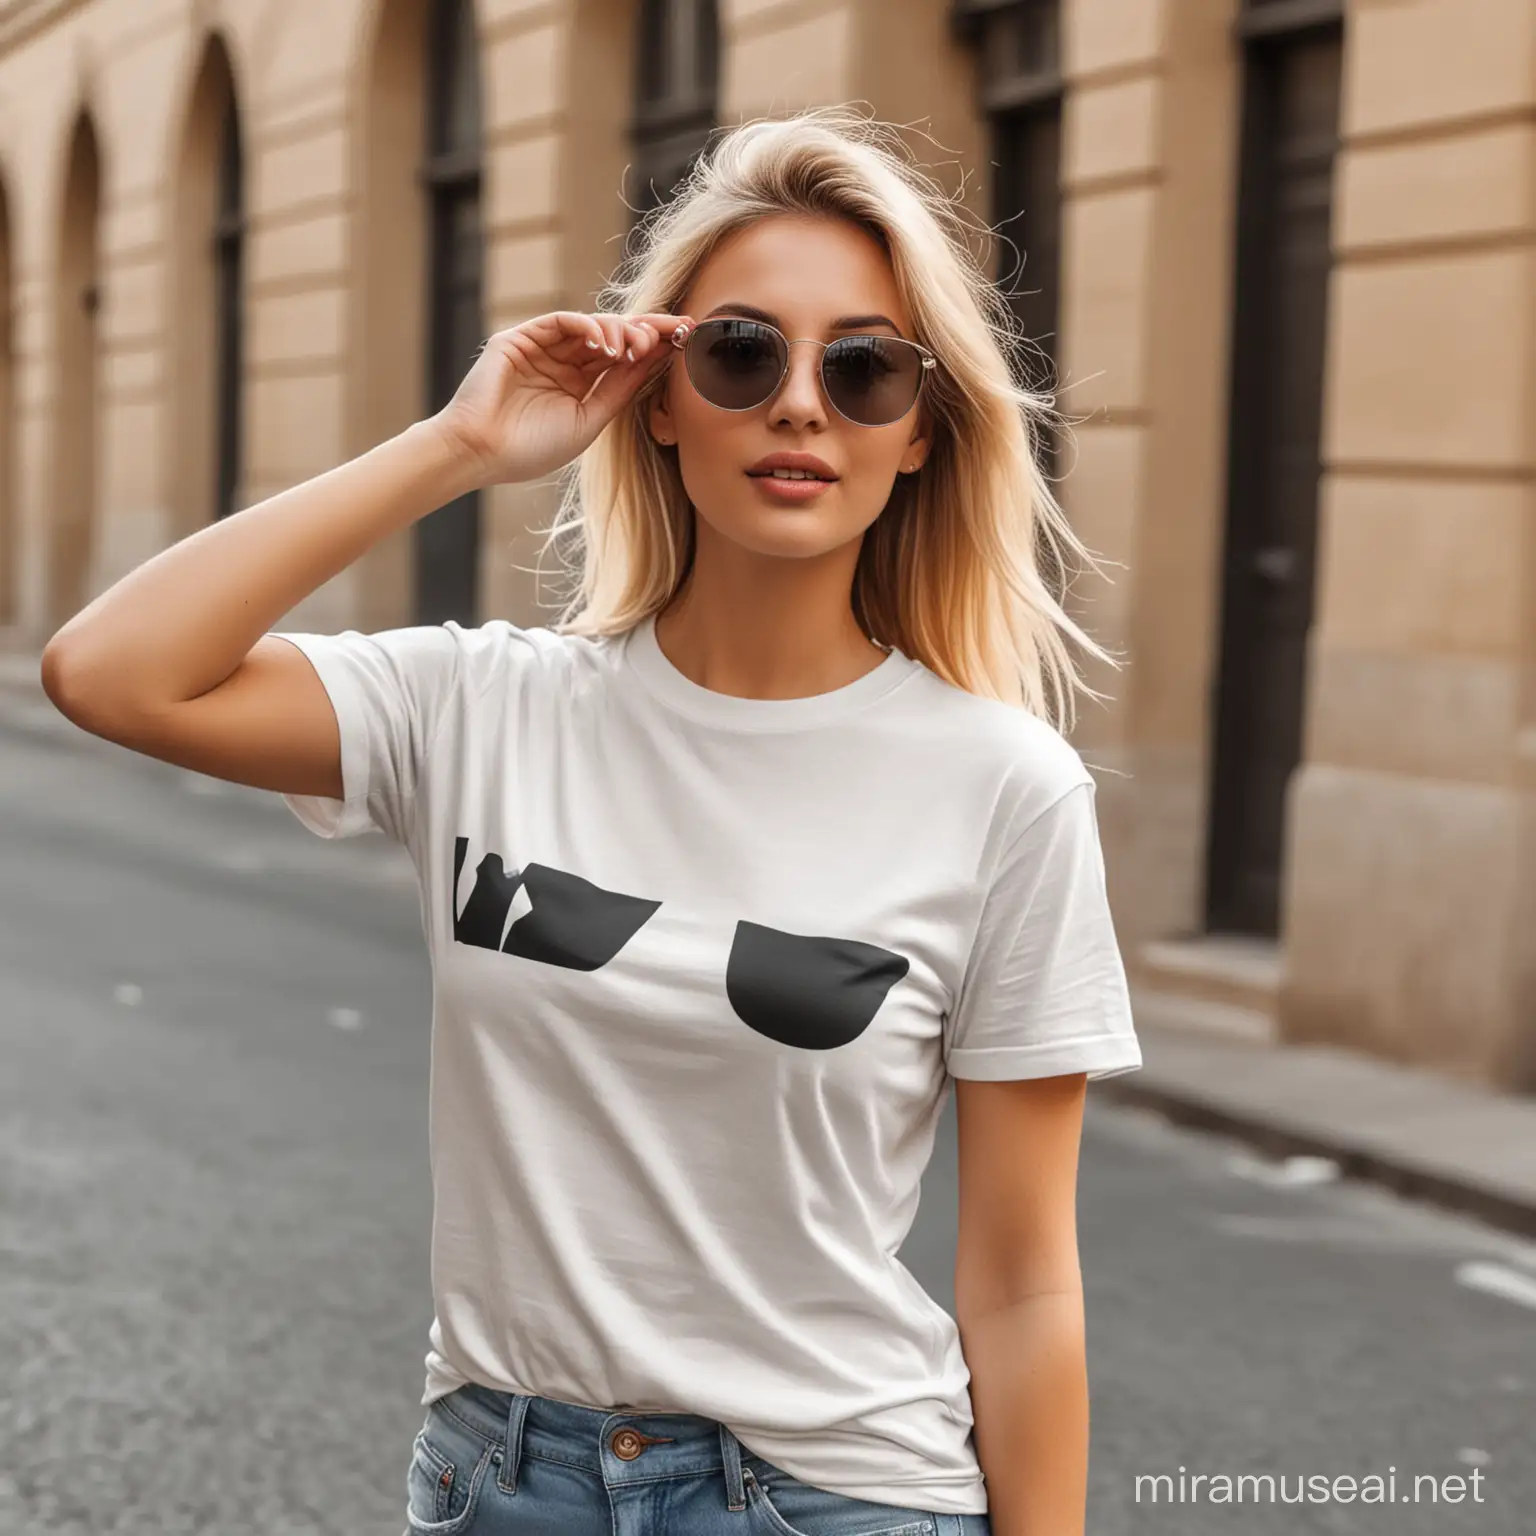 Blonde Woman Wearing Sunglasses and Blank TShirt Posing on Urban Street